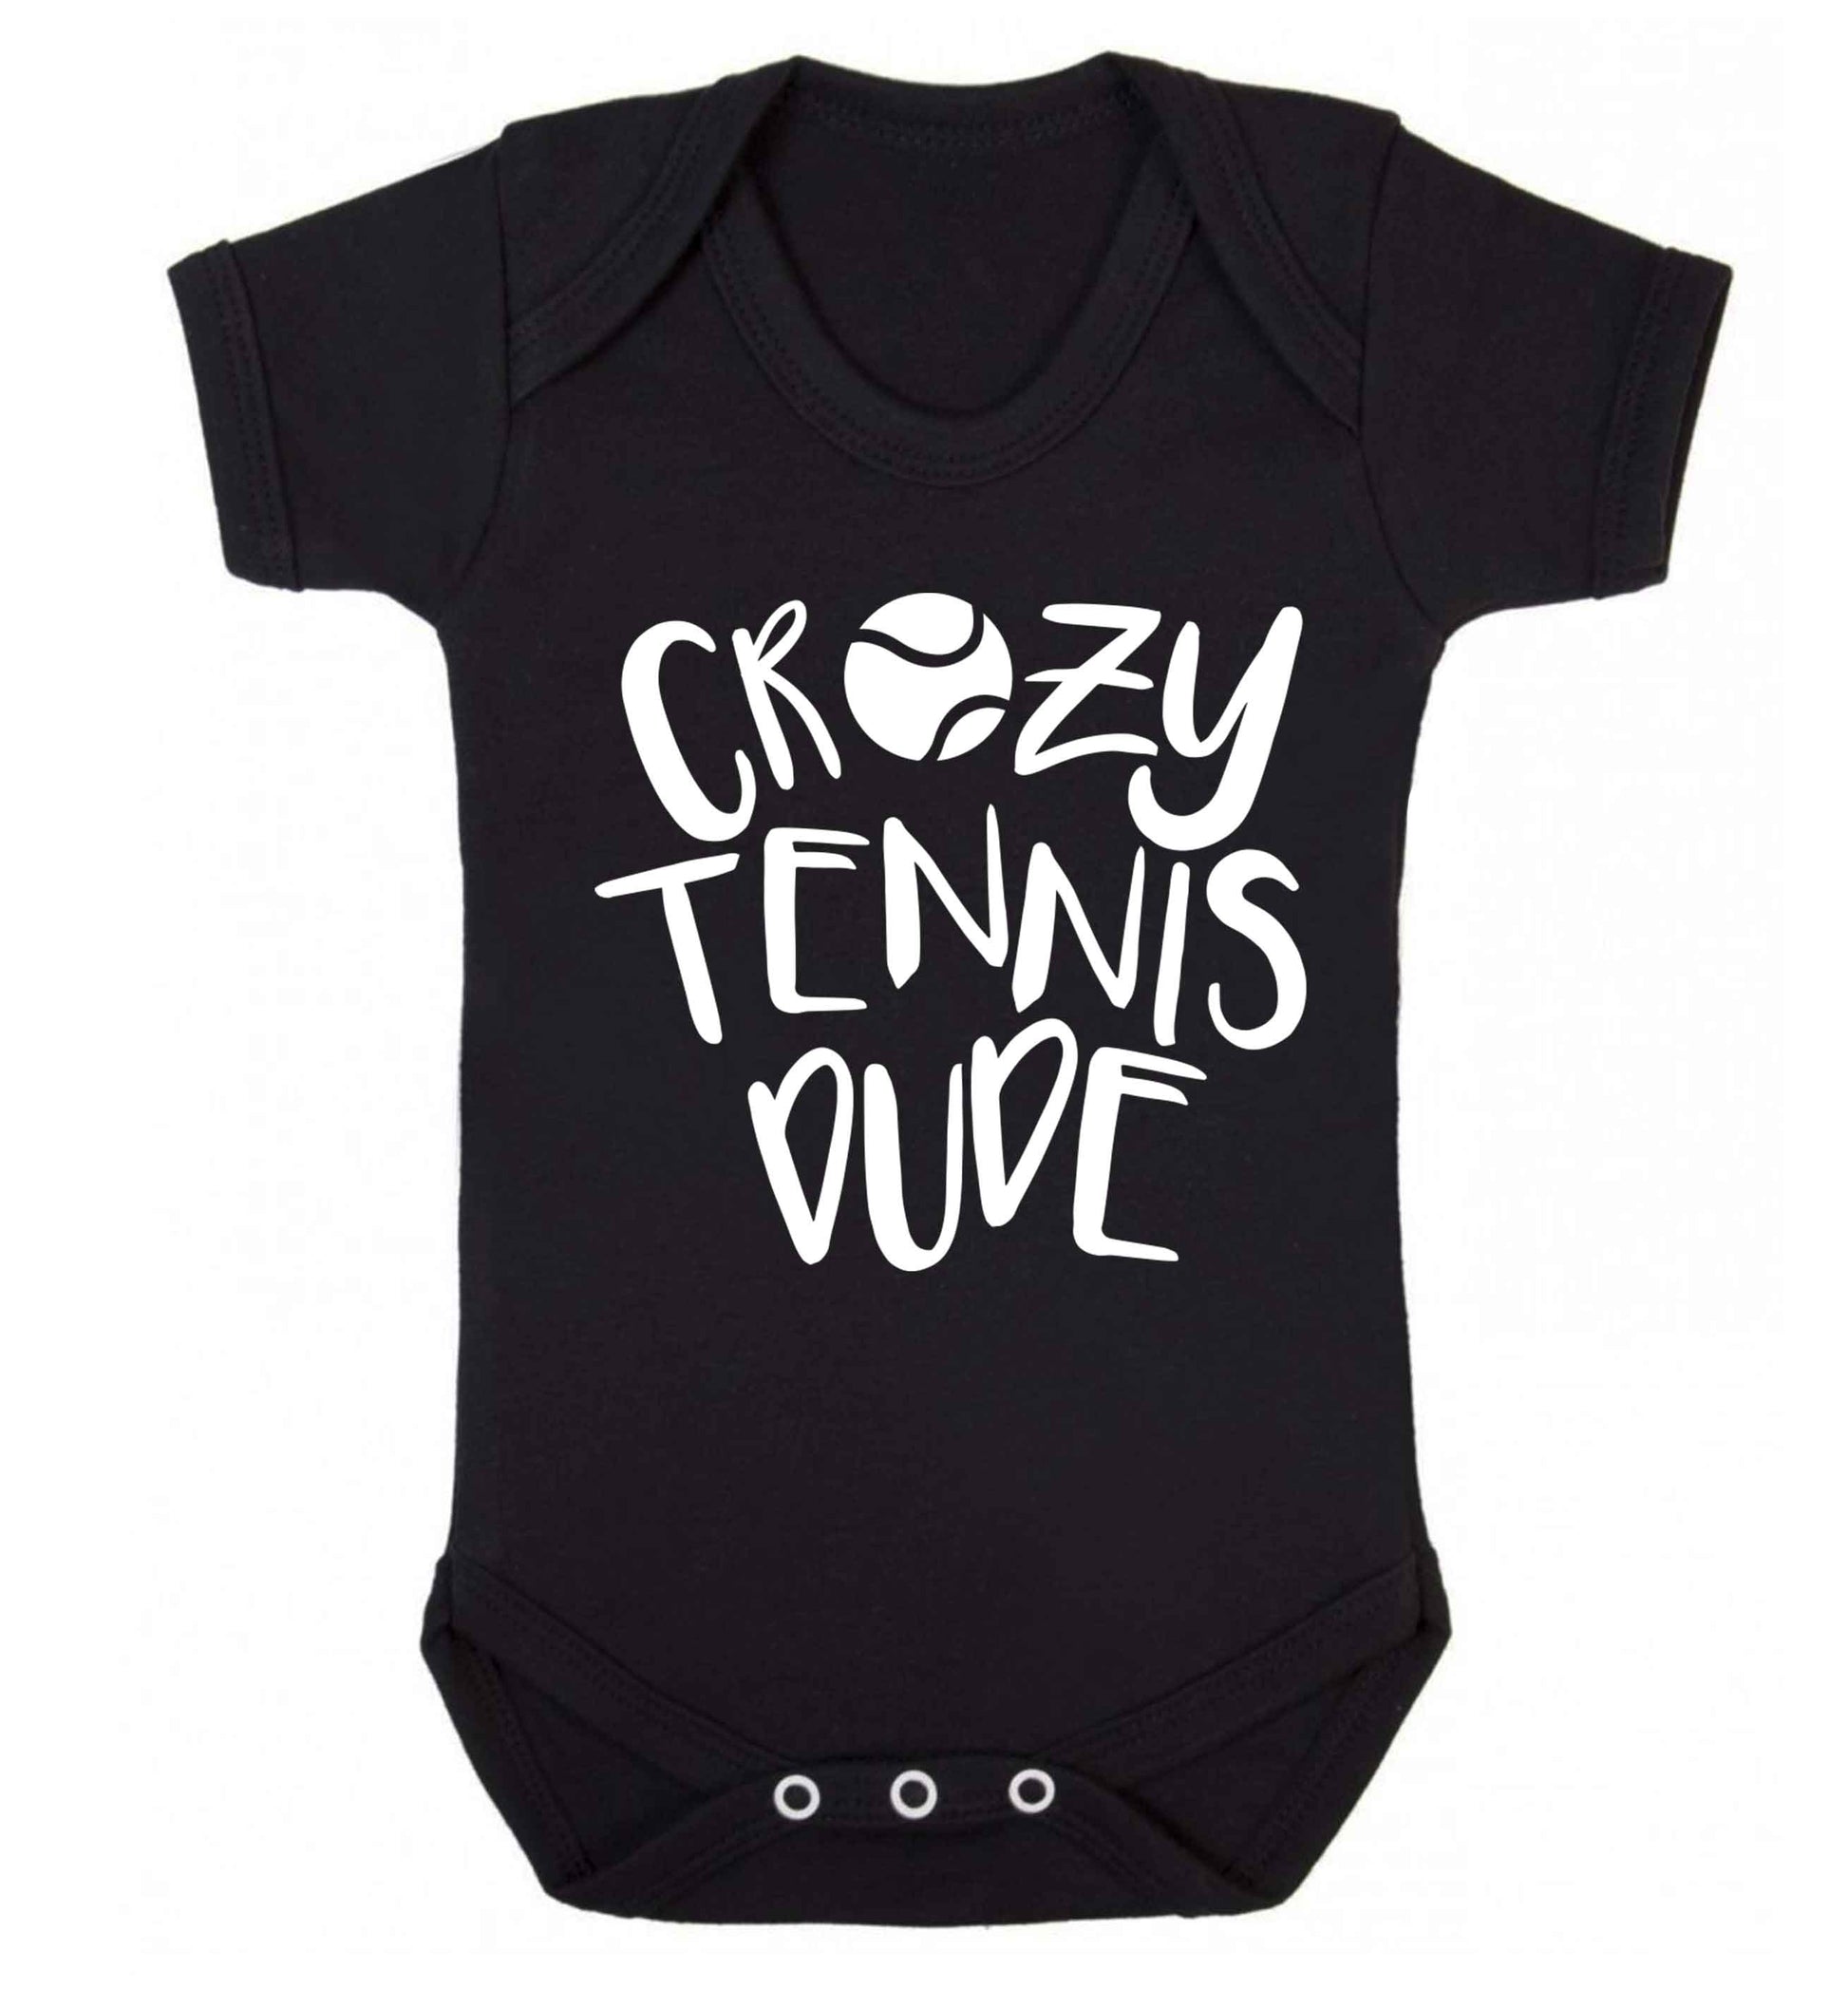 Crazy tennis dude Baby Vest black 18-24 months